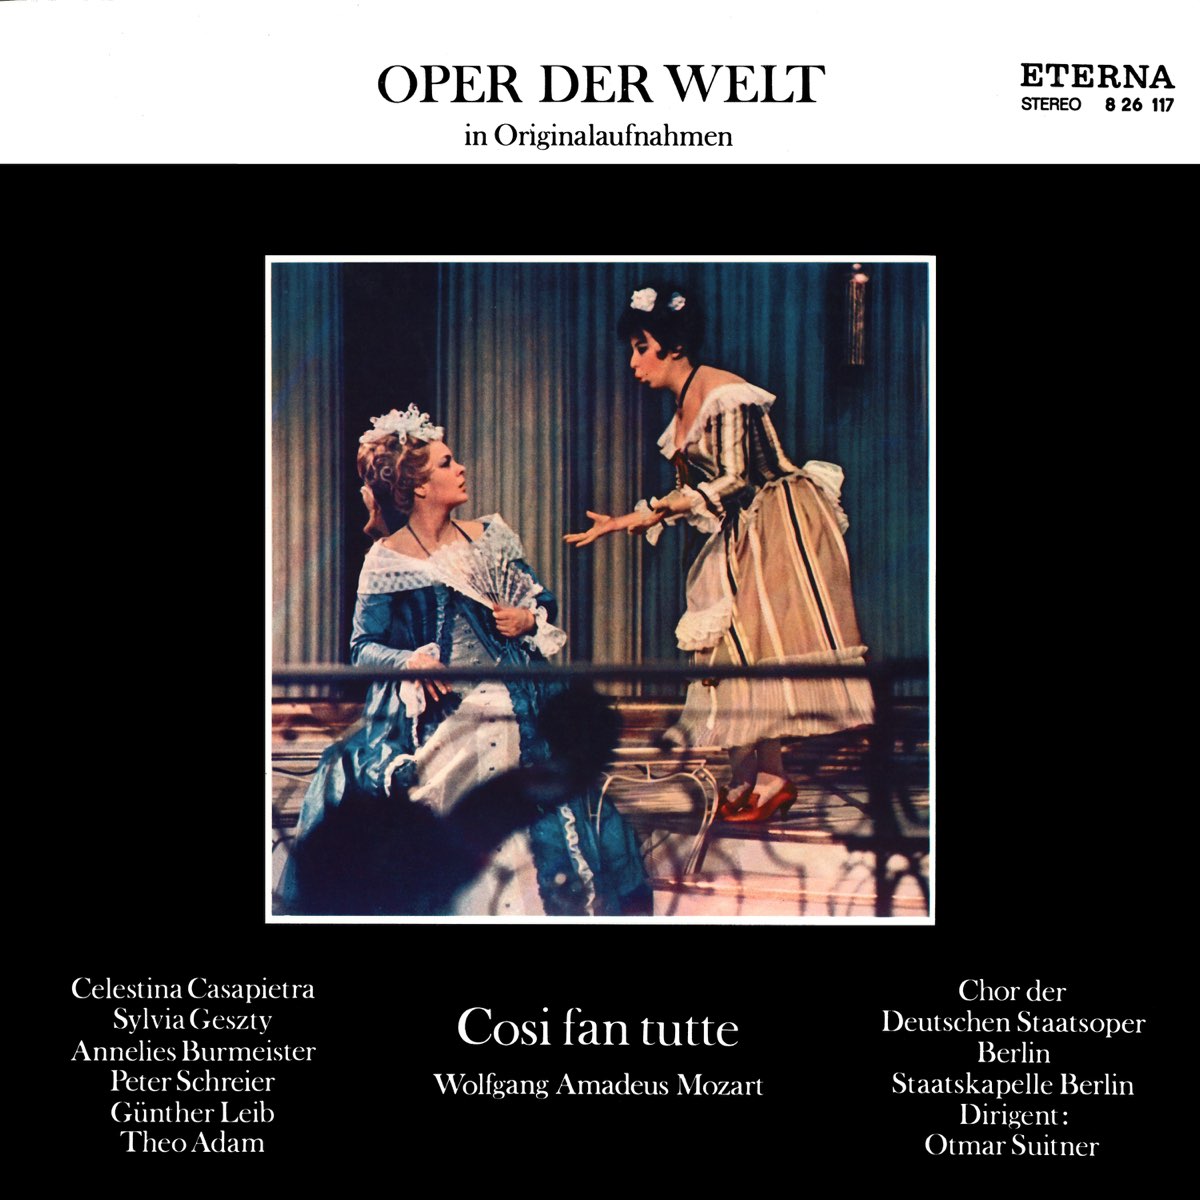 Mozart: Così fan tutte (Highlights - Sung in Italian) by Staatskapelle  Berlin, Berlin State Opera Chorus, Peter Schreier, Theo Adam & Otmar  Suitner on Apple Music